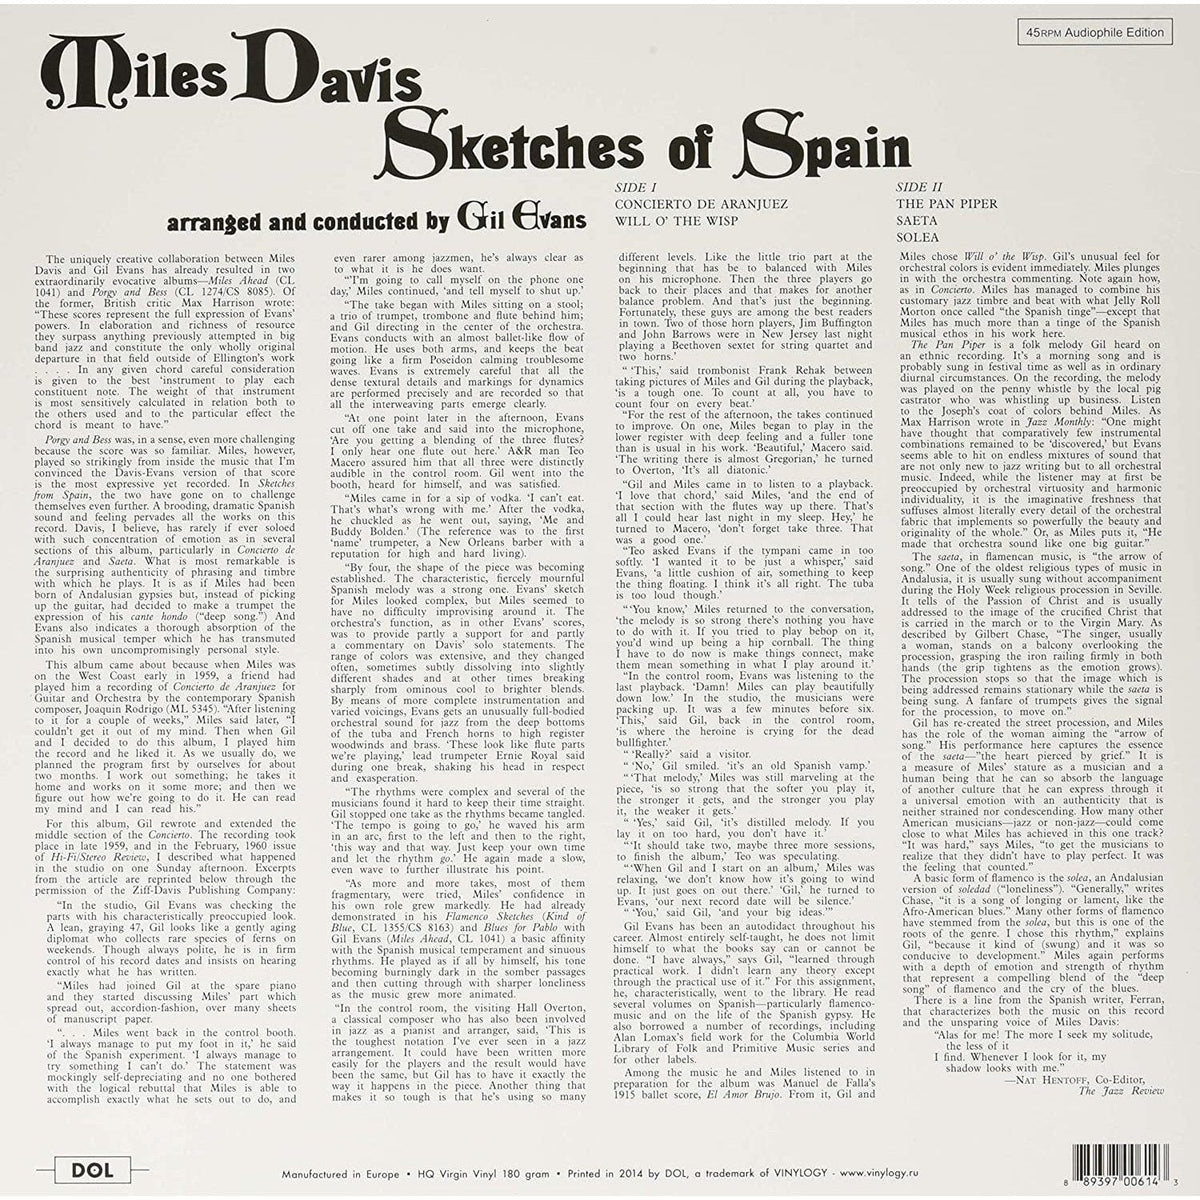 MILES DAVIS - SKETCHES OF SPAIN [LIMITED BLUE VINYL]